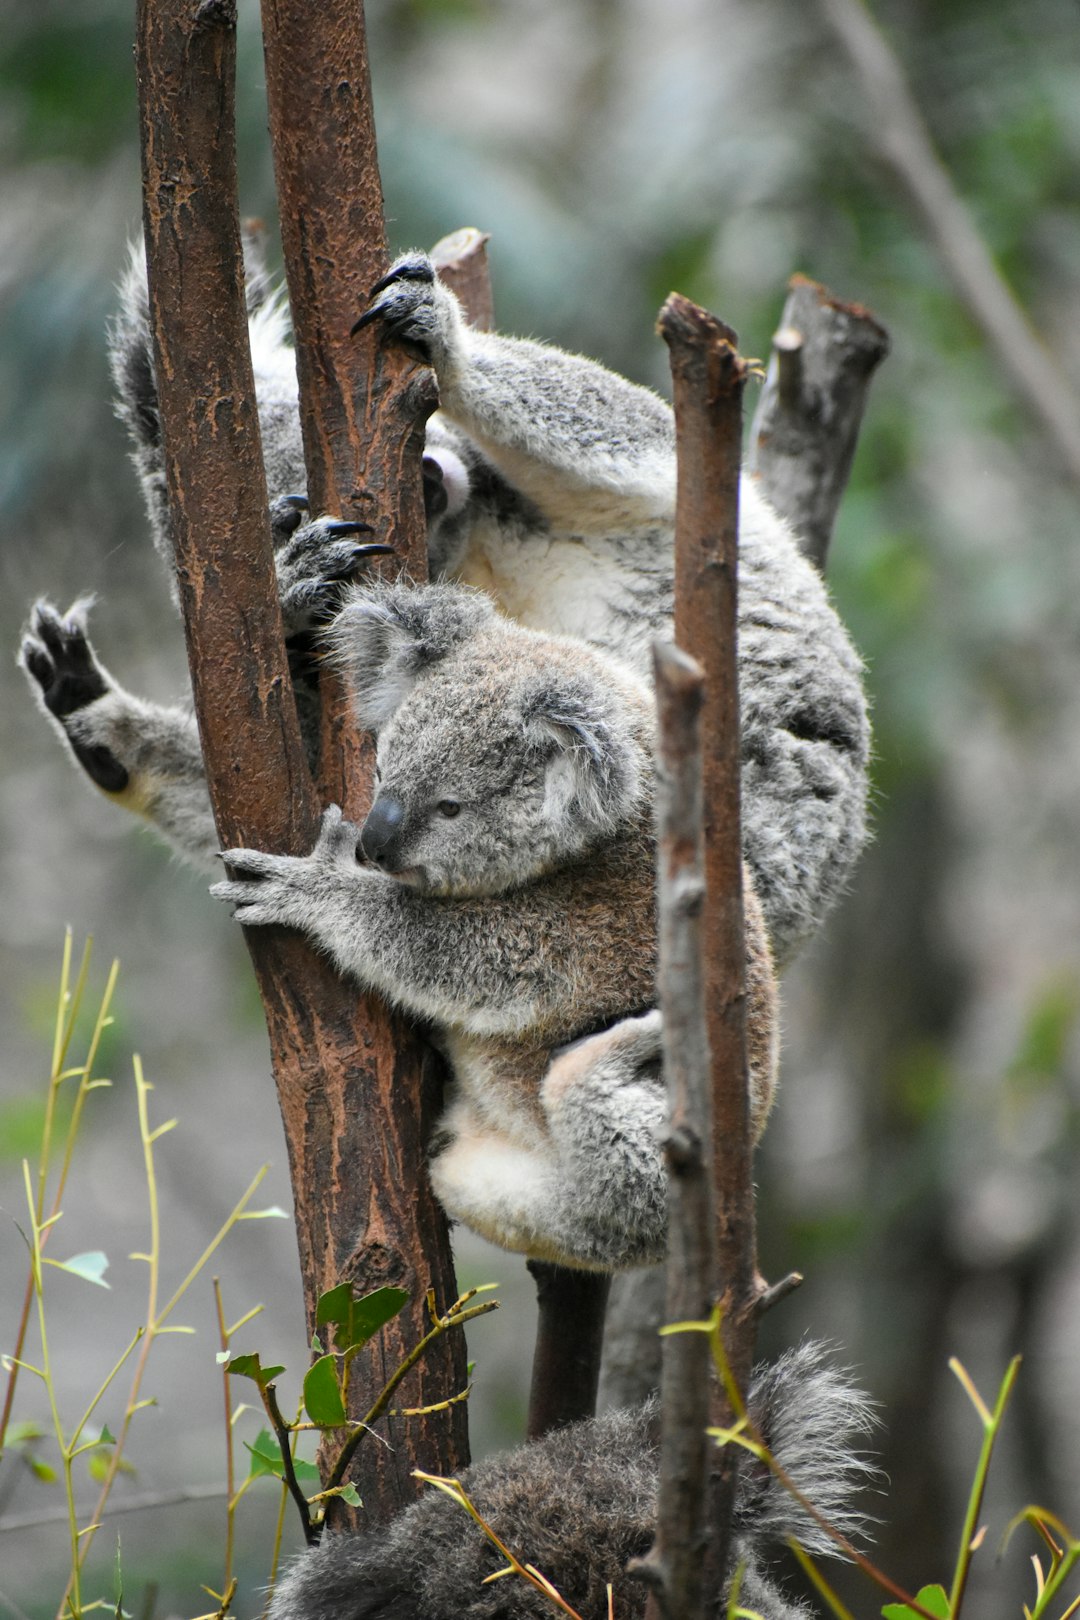 Travel Tips and Stories of Currumbin Wildlife Sanctuary in Australia